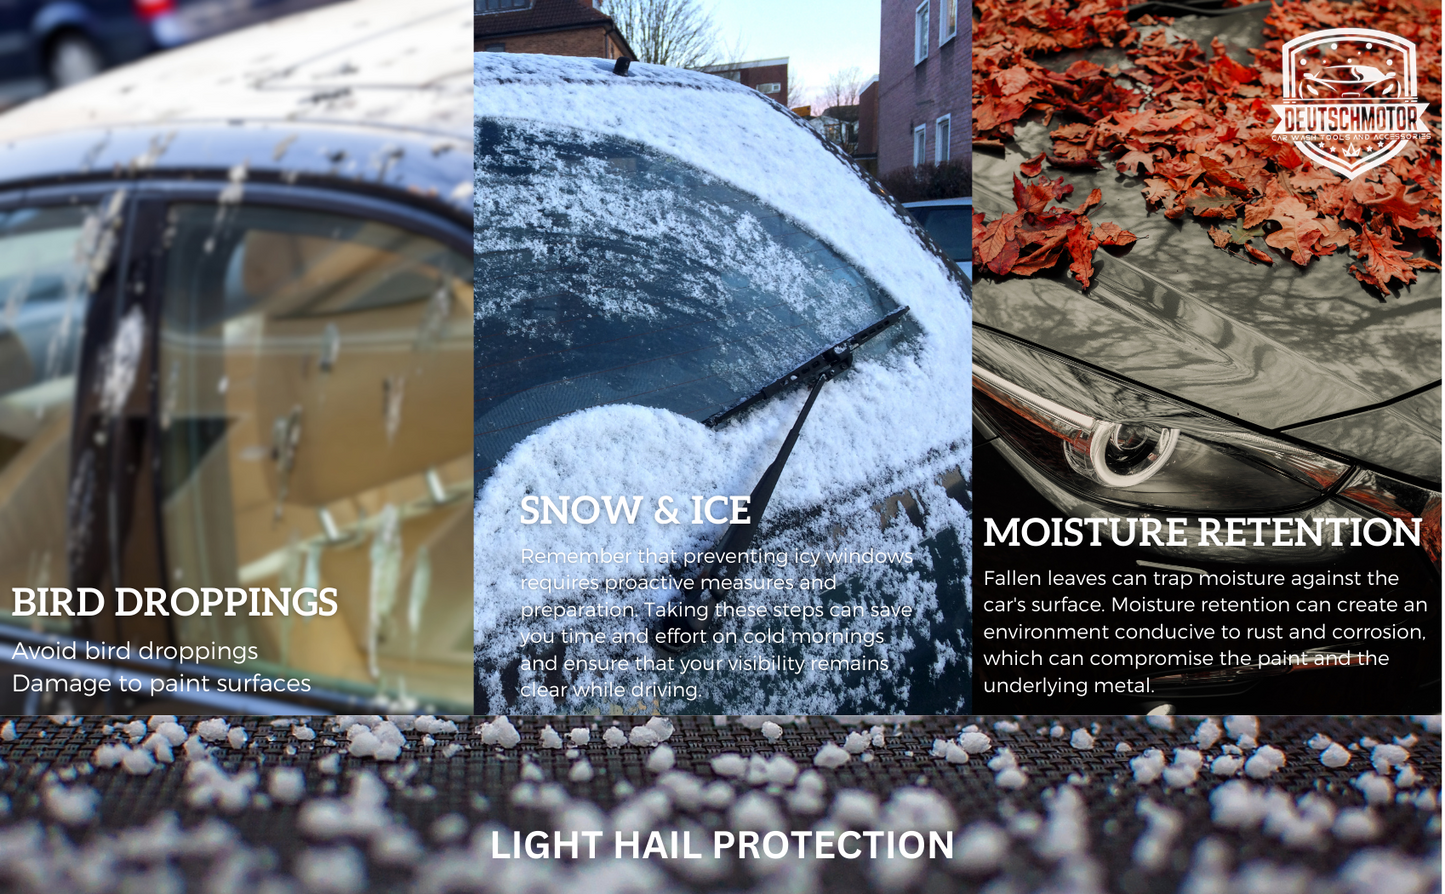 Deutschmotor for all BMW X7 series black Water Resistant UV Rays Hail Protection Storage Winter Snow (semi-custom) 700 series